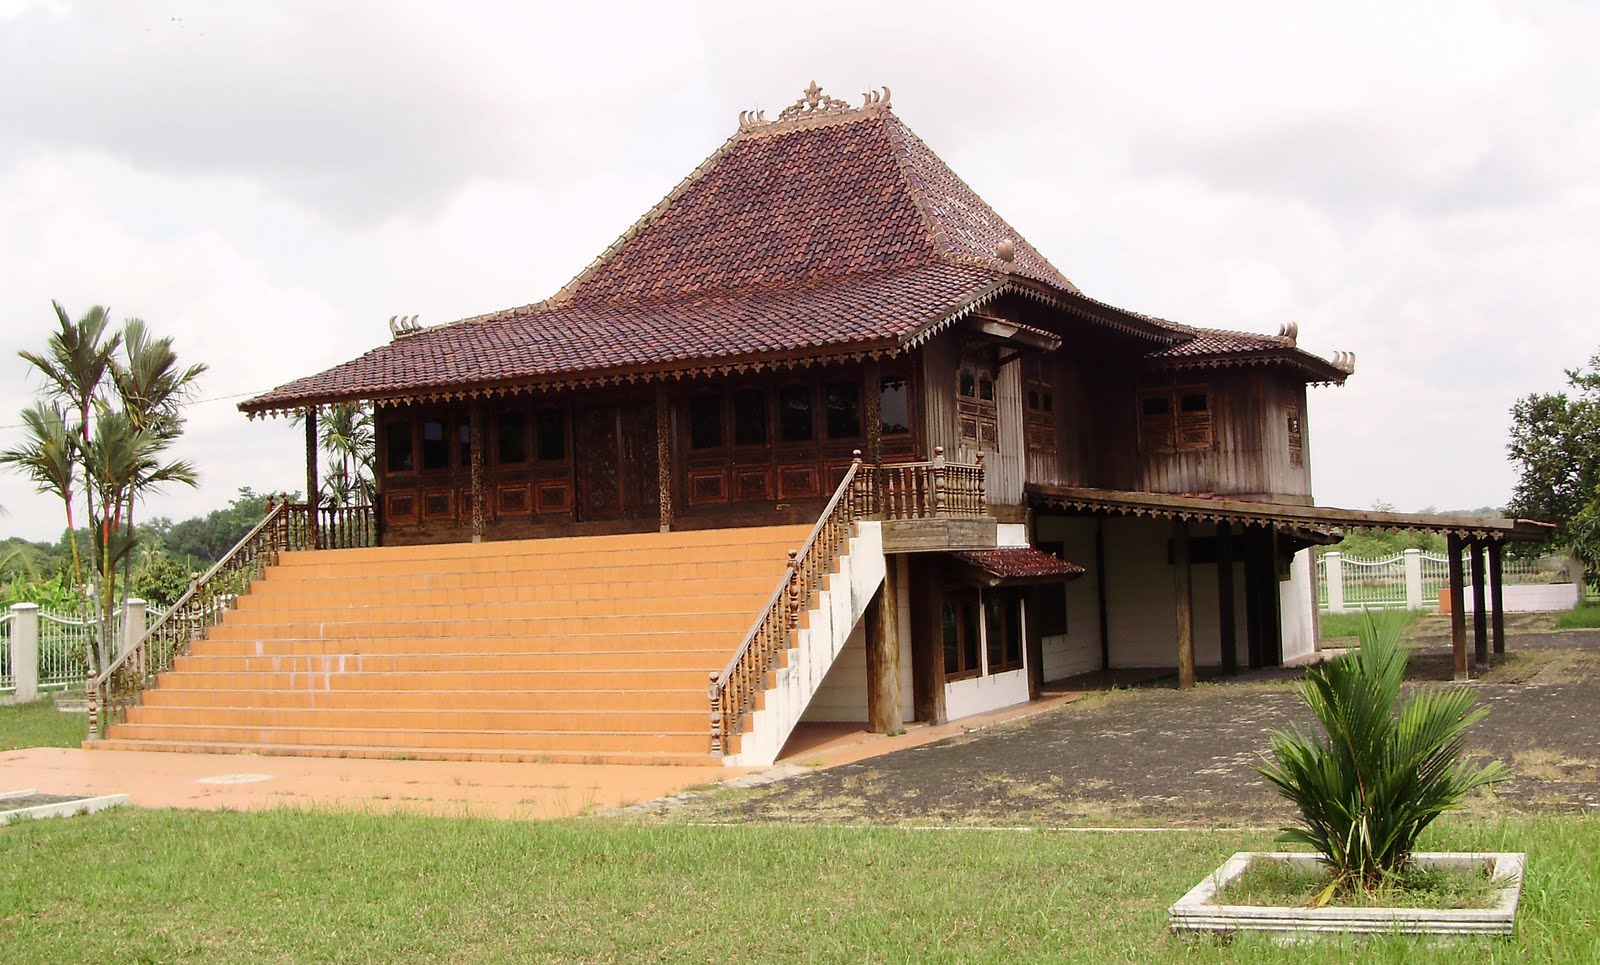 Download this Rumah Adat Tradisional Limas picture